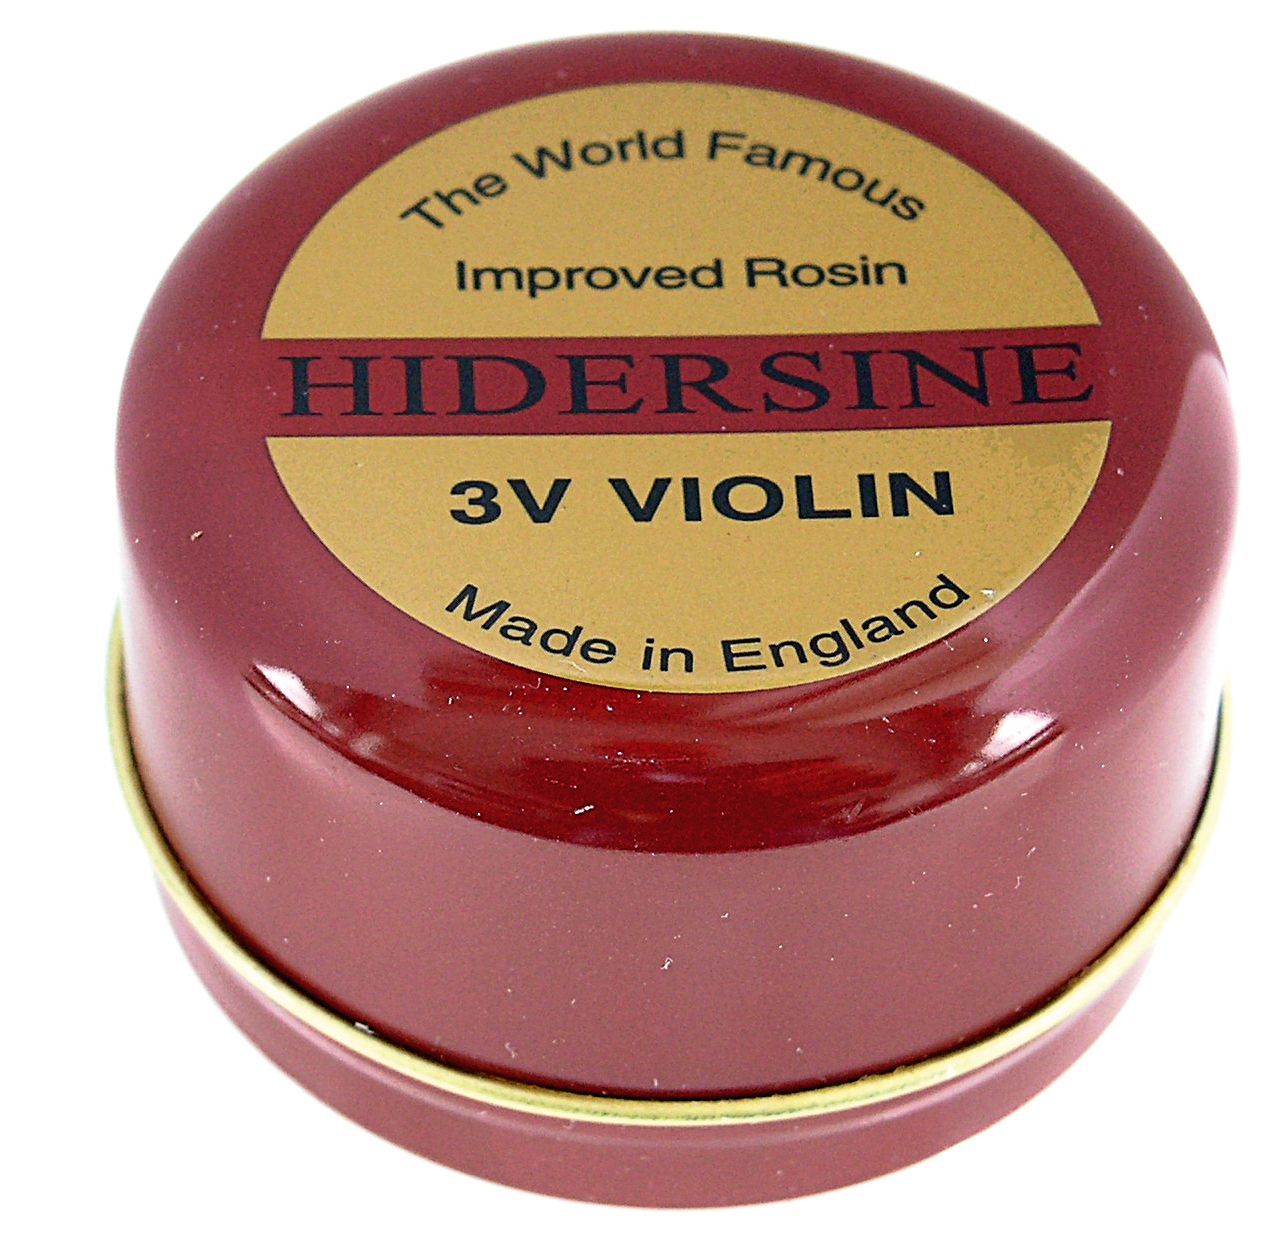 Kolofon Hidersine Violine hell, gute Qualität, made in England